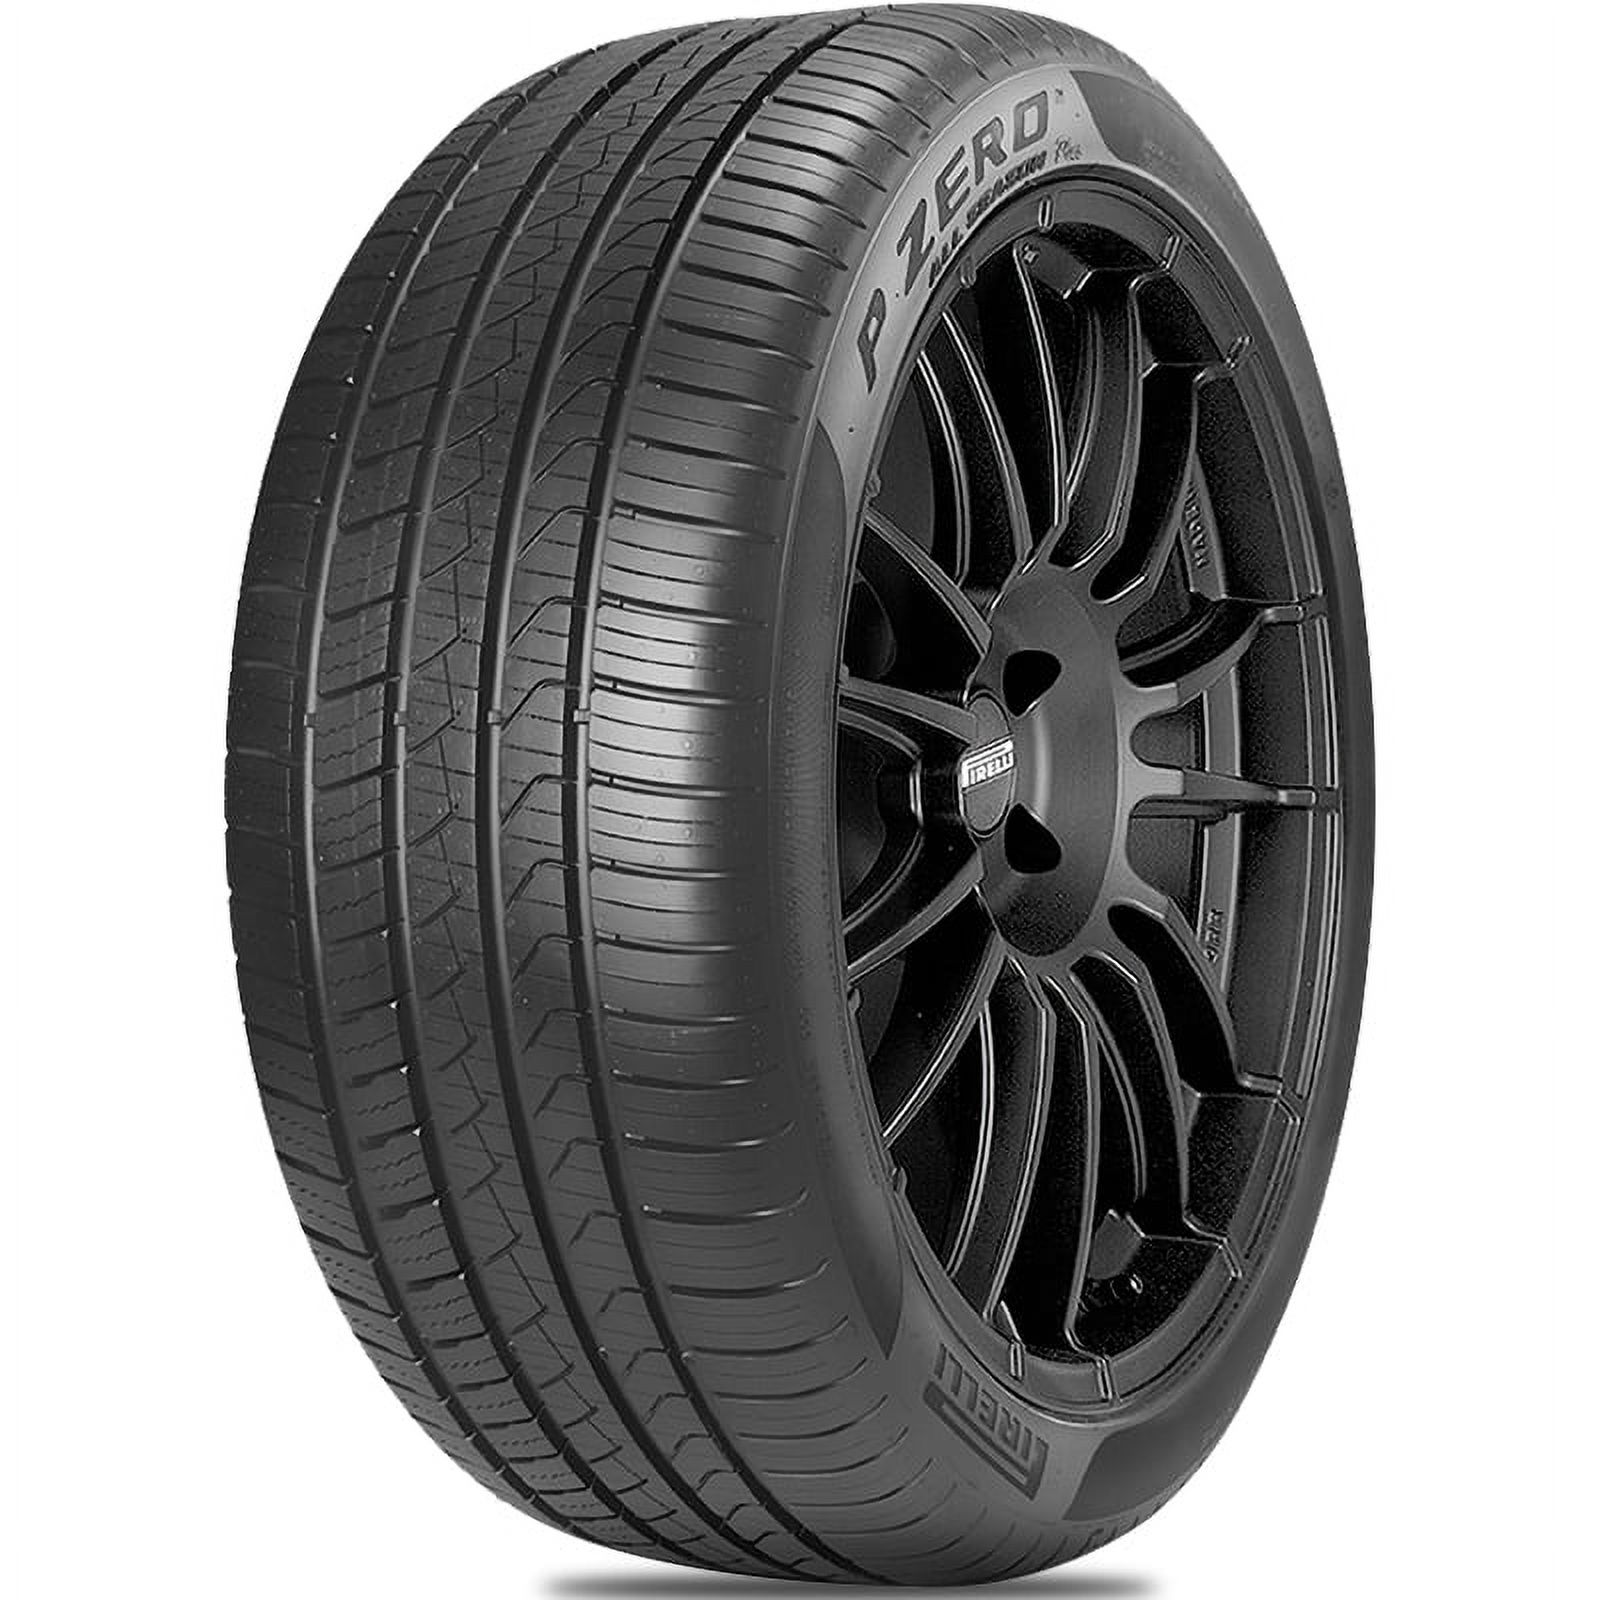 Pirelli P Zero All Season Plus UHP All Season 235/40R18 95Y XL Passenger Tire - image 1 of 3